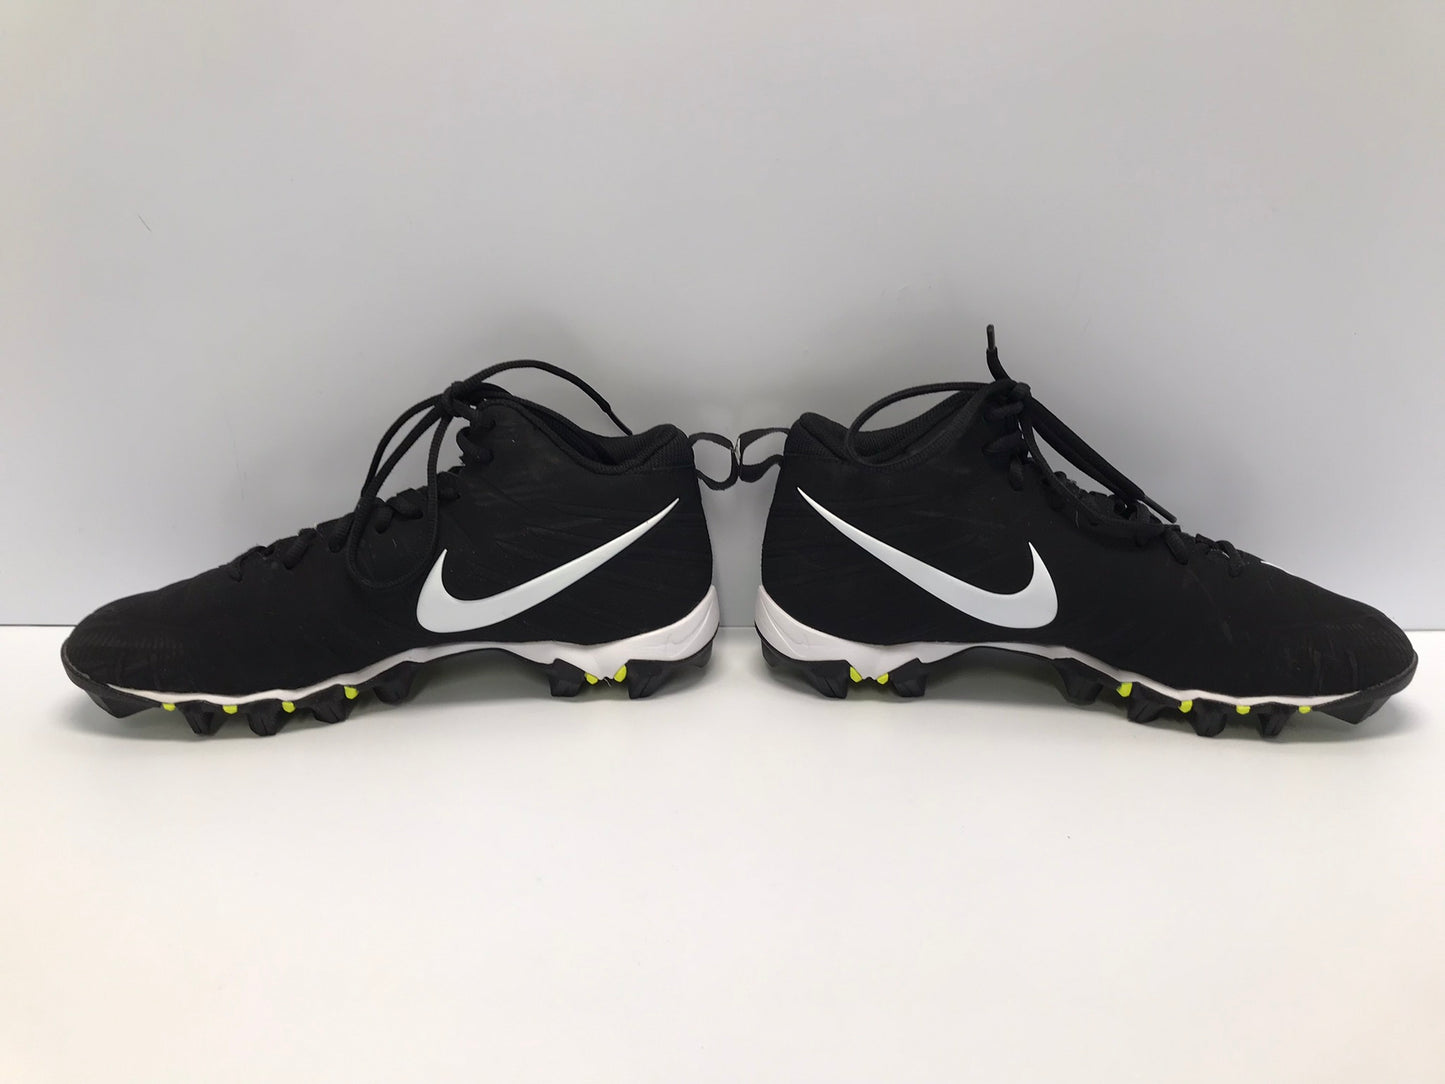 Baseball Shoes Cleats Men's Size 9 Nike Alpha Lime Black White New Demo Model